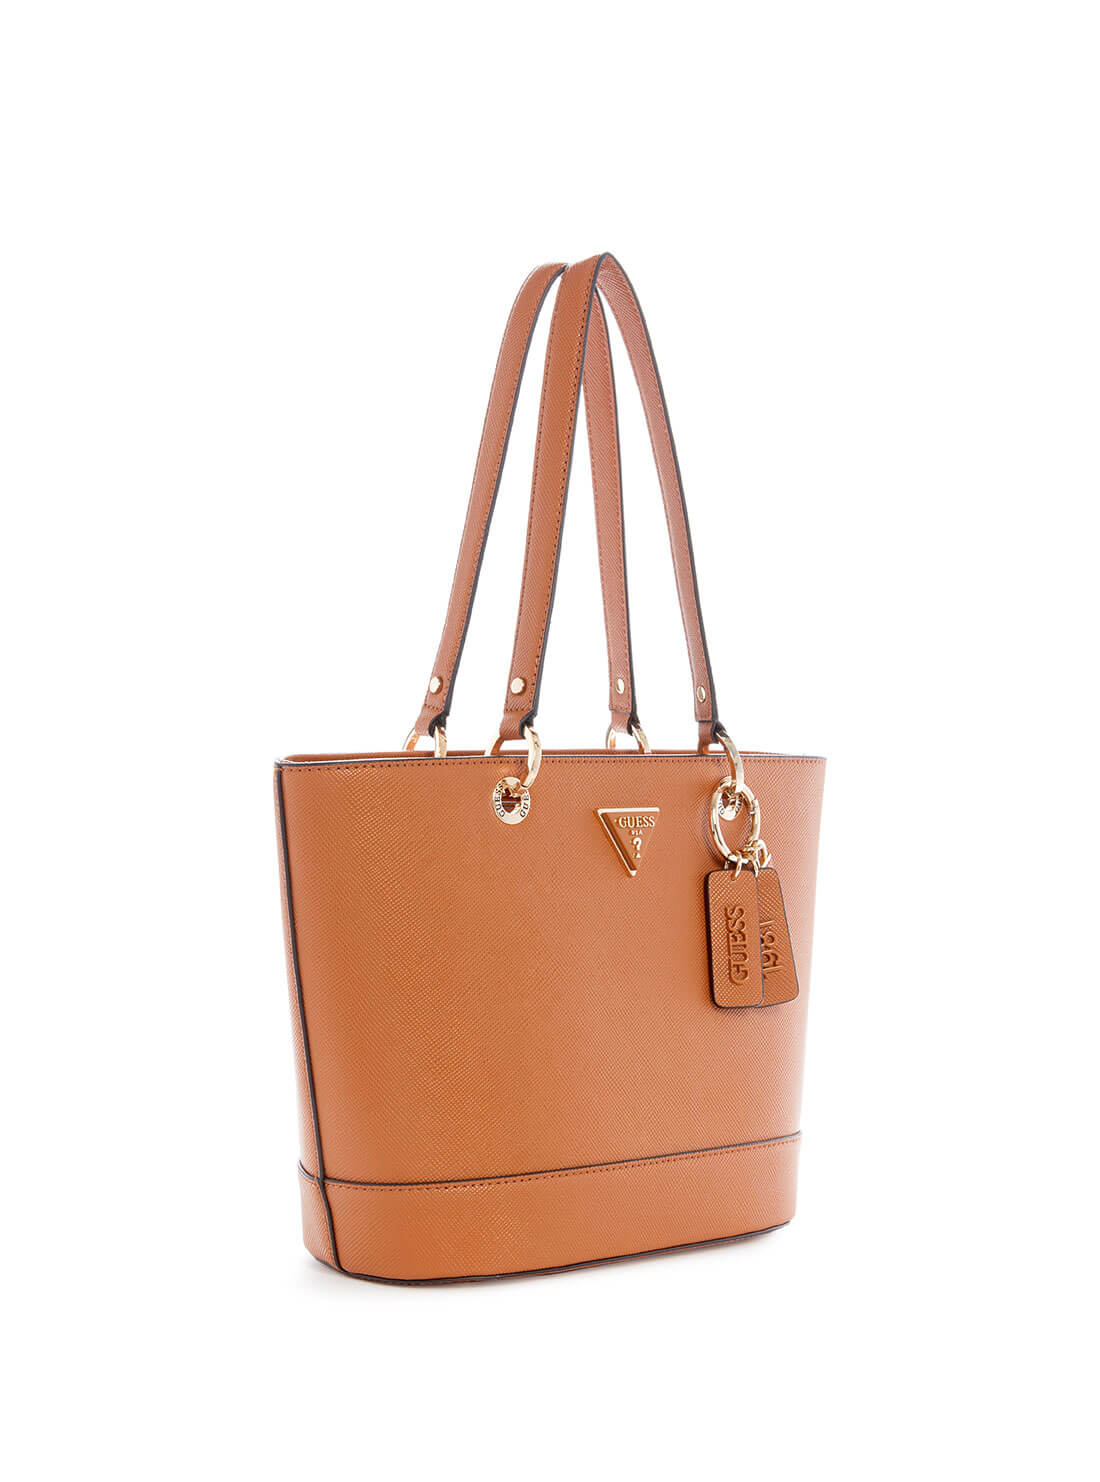 Cognac Brown Noelle Small Elite Tote Bag | GUESS Women's Handbags | side view